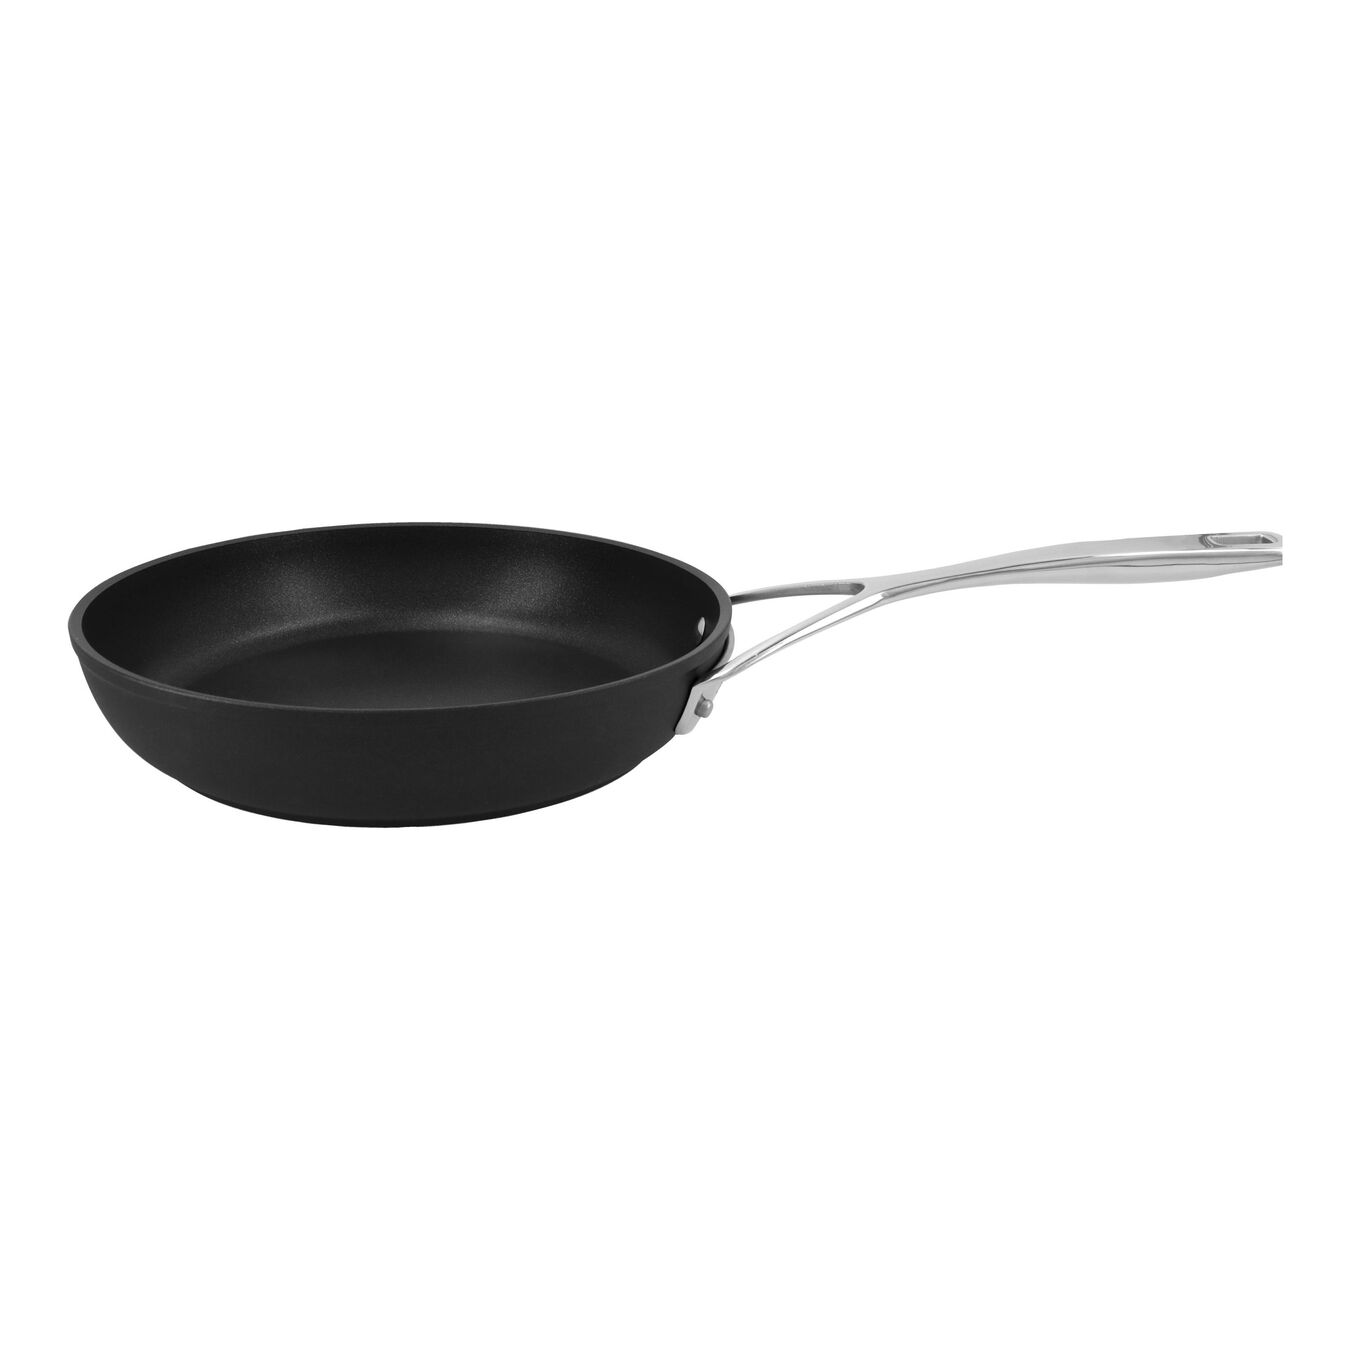 24 cm Aluminum Frying pan silver-black,,large 1